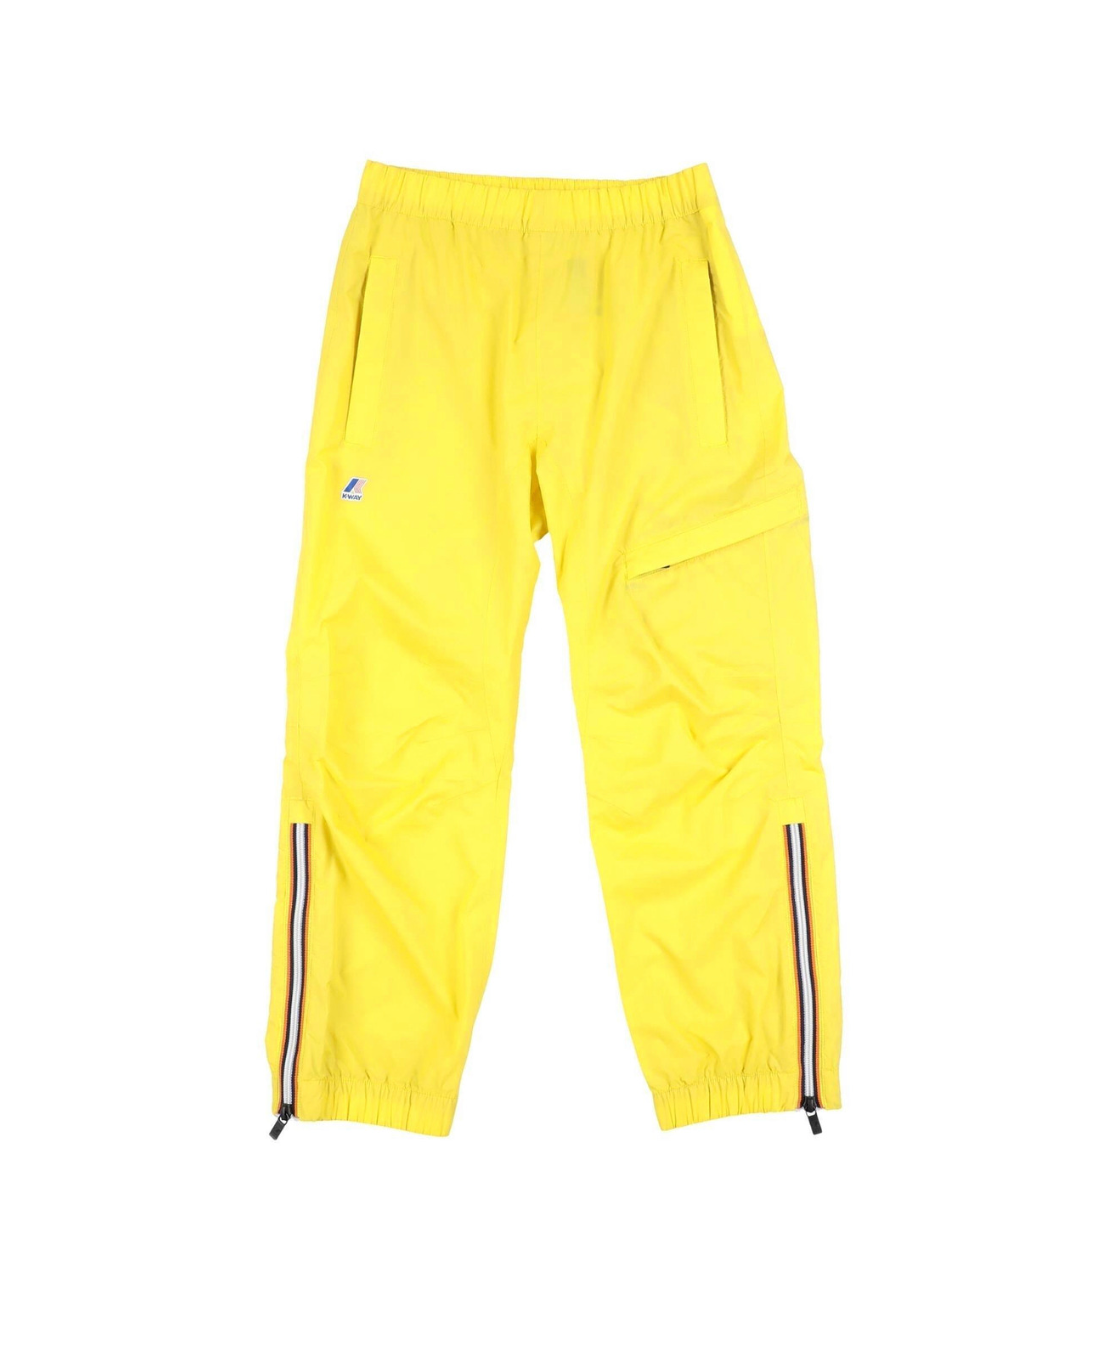 K-WAY - Yellow waterproof pants - 8 years old